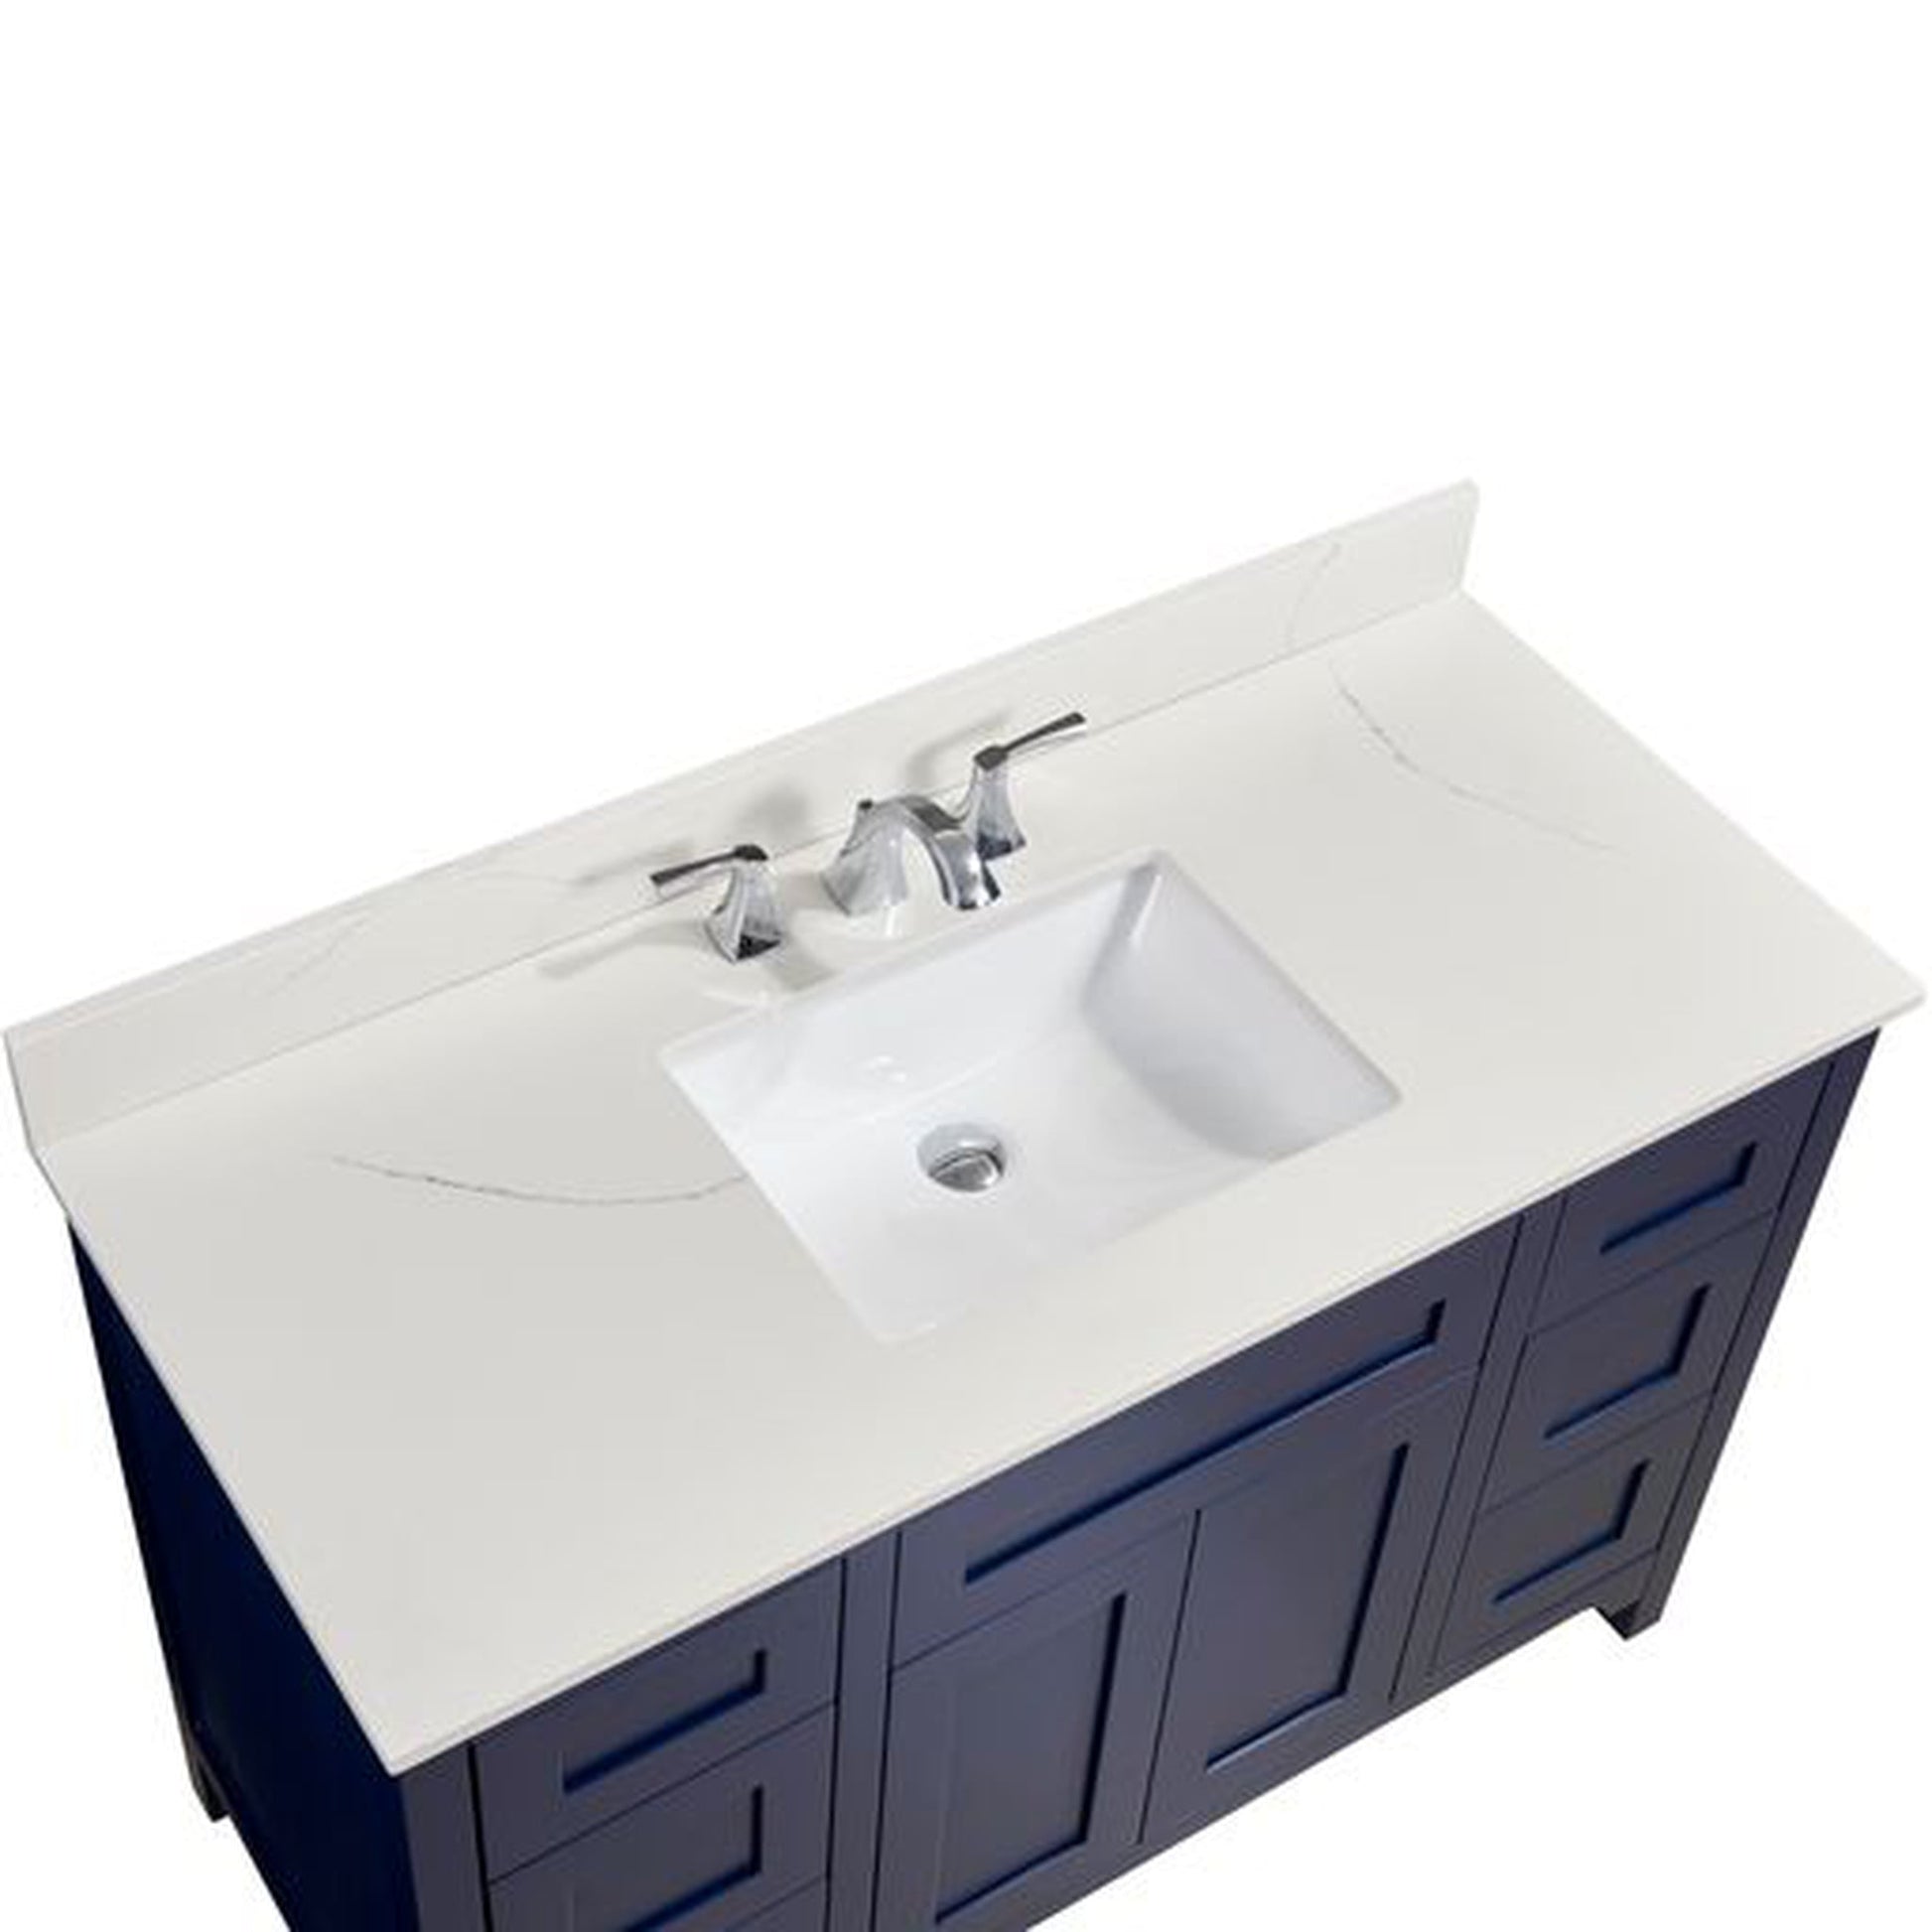 Altair Belluno 49" x 22" Milano White Composite Stone Bathroom Vanity Top With White SInk